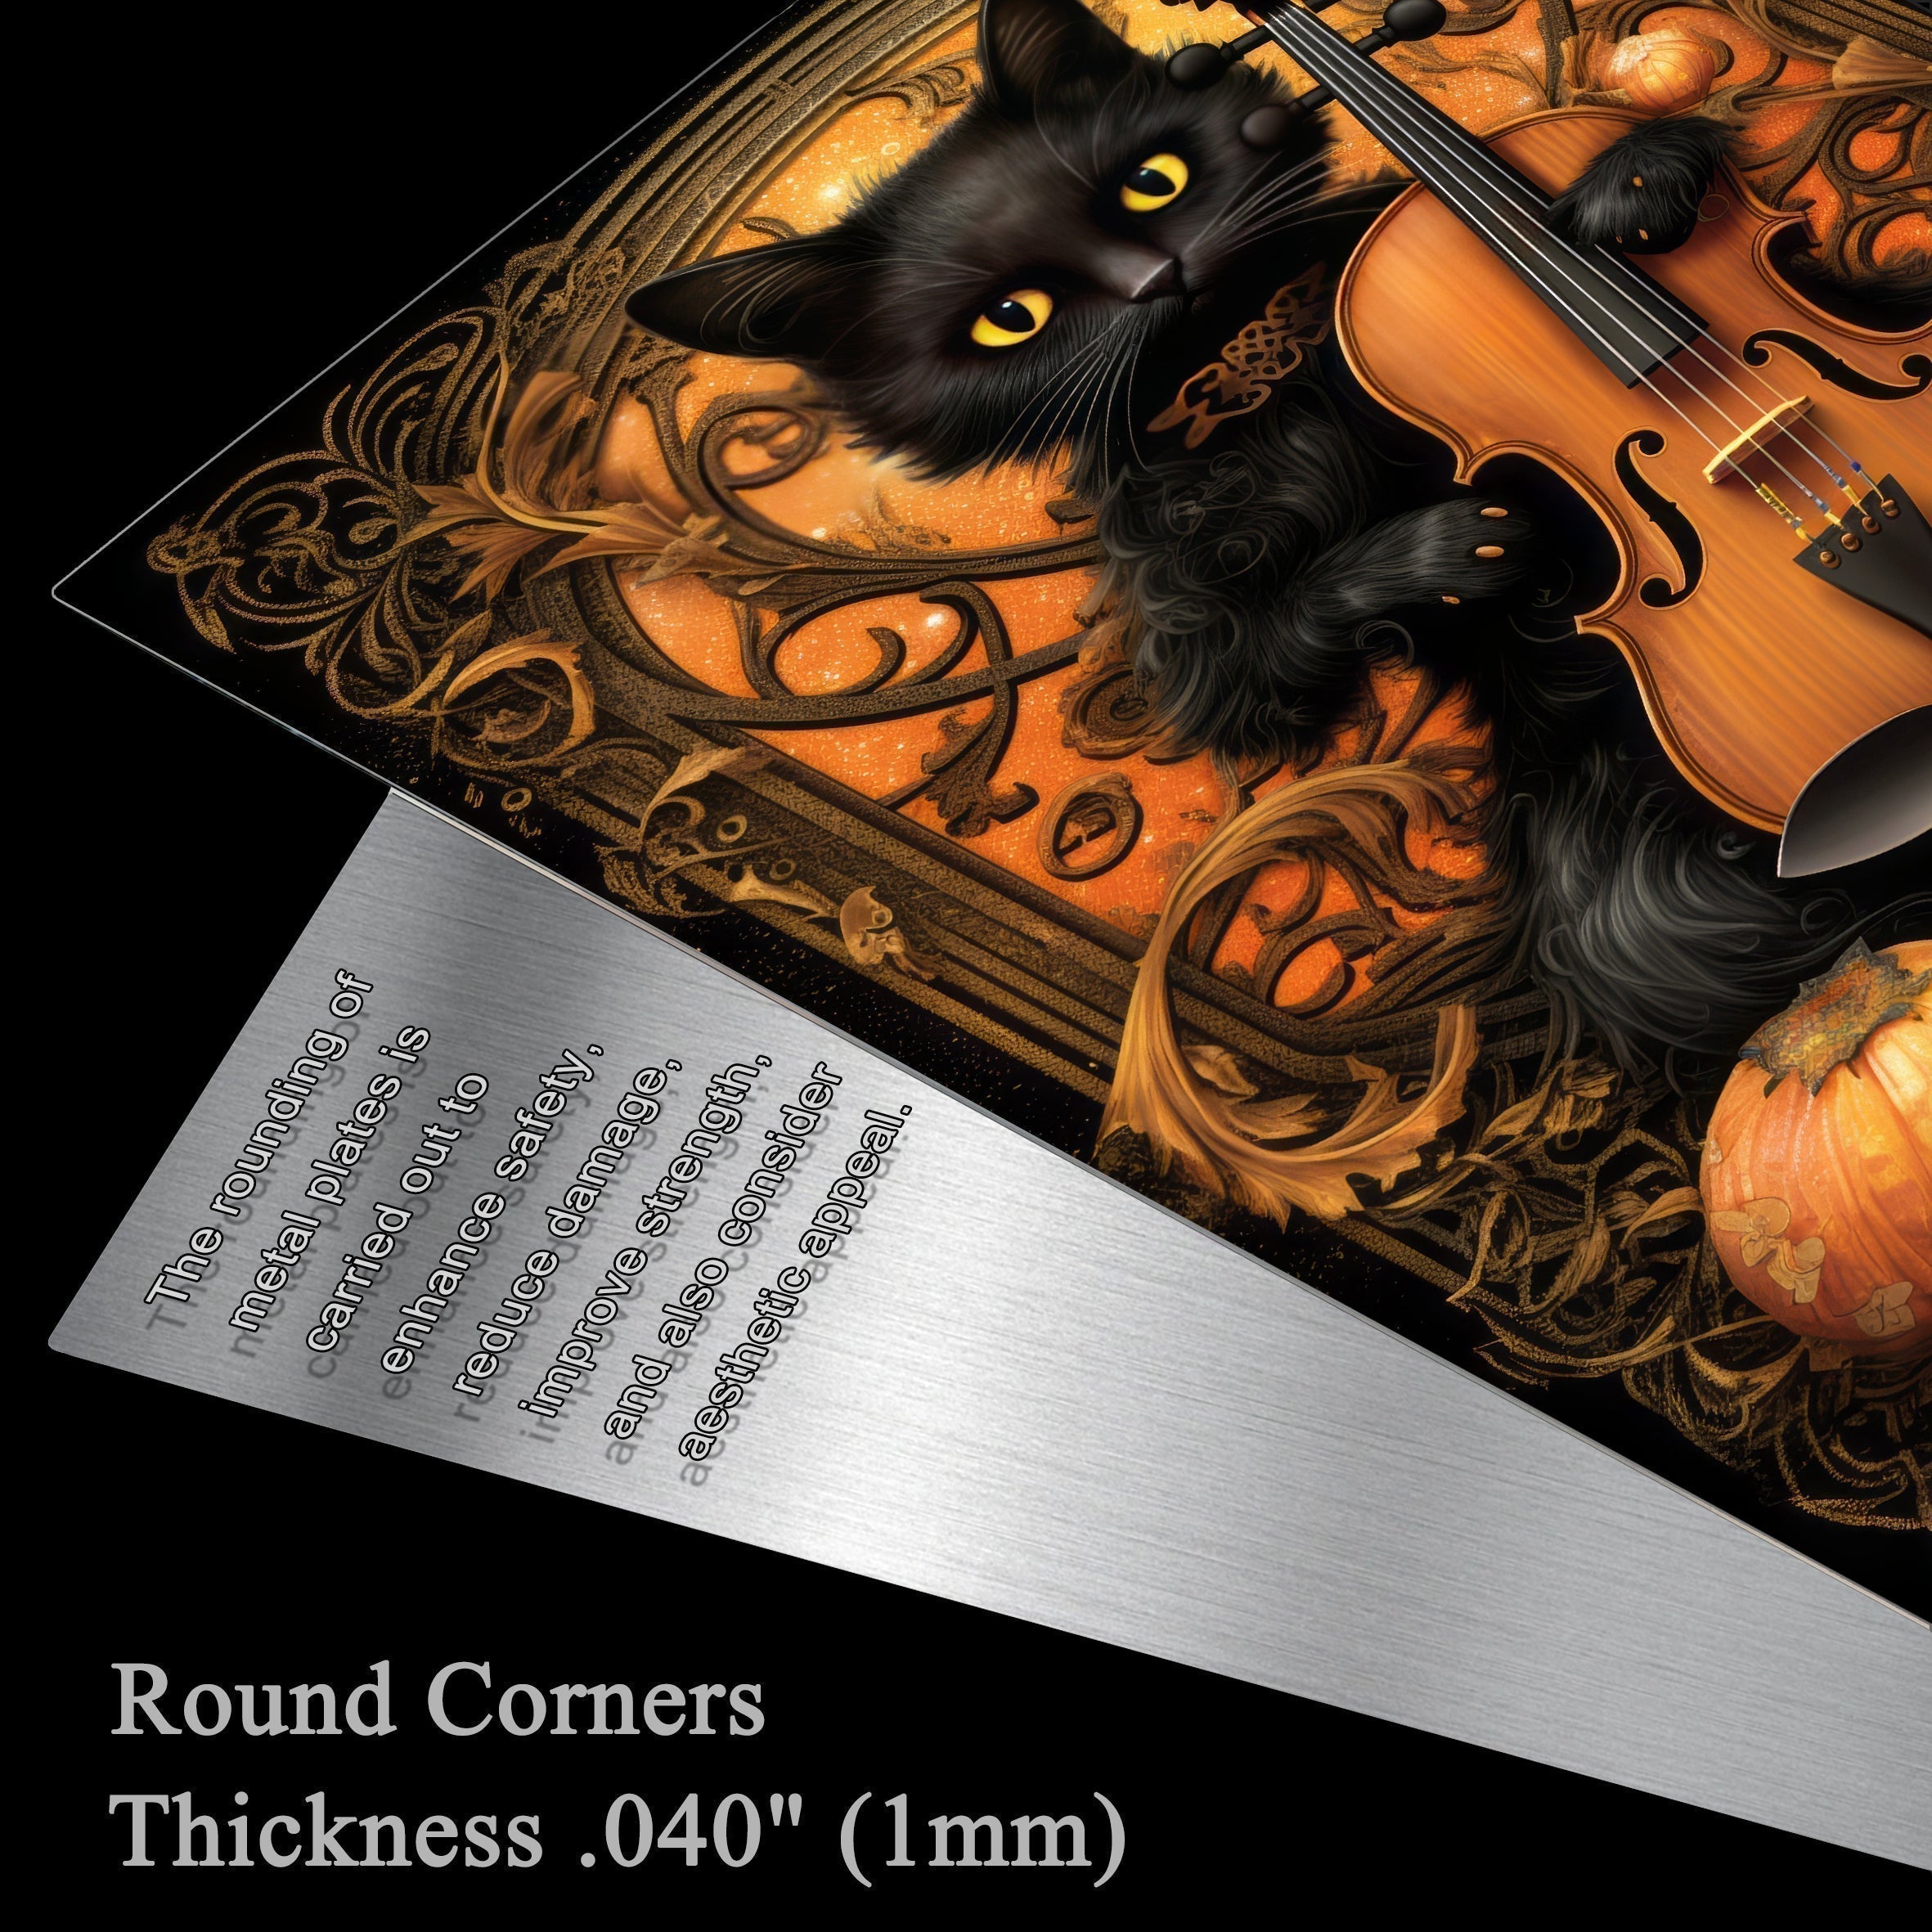 Roronoa Zoro King of Hell-designed by @Pixalaxy